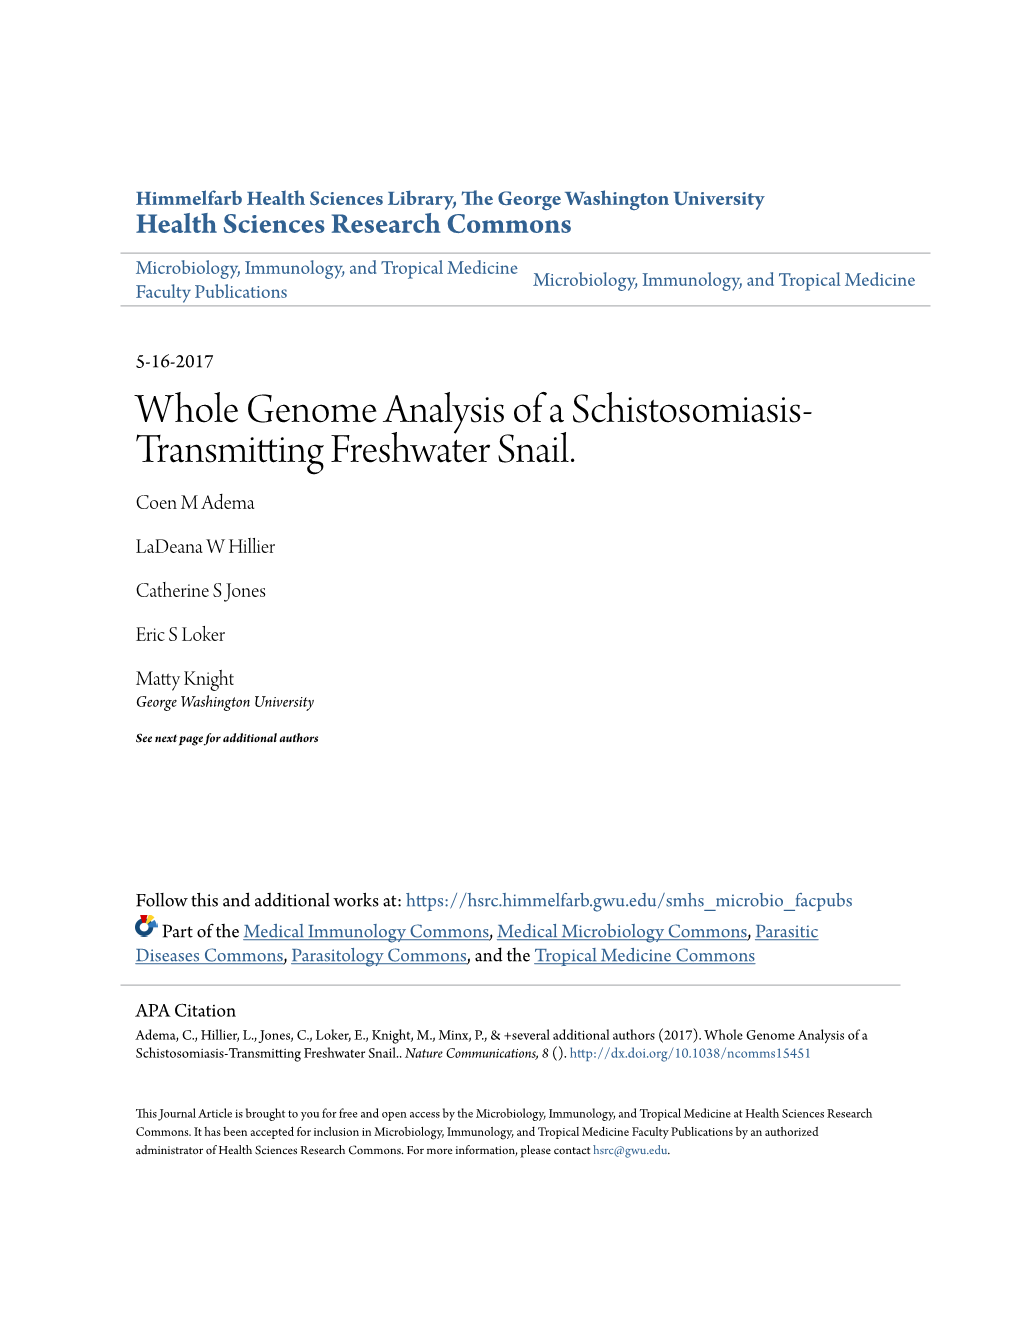 Whole Genome Analysis of a Schistosomiasis-Transmitting Freshwater Snail